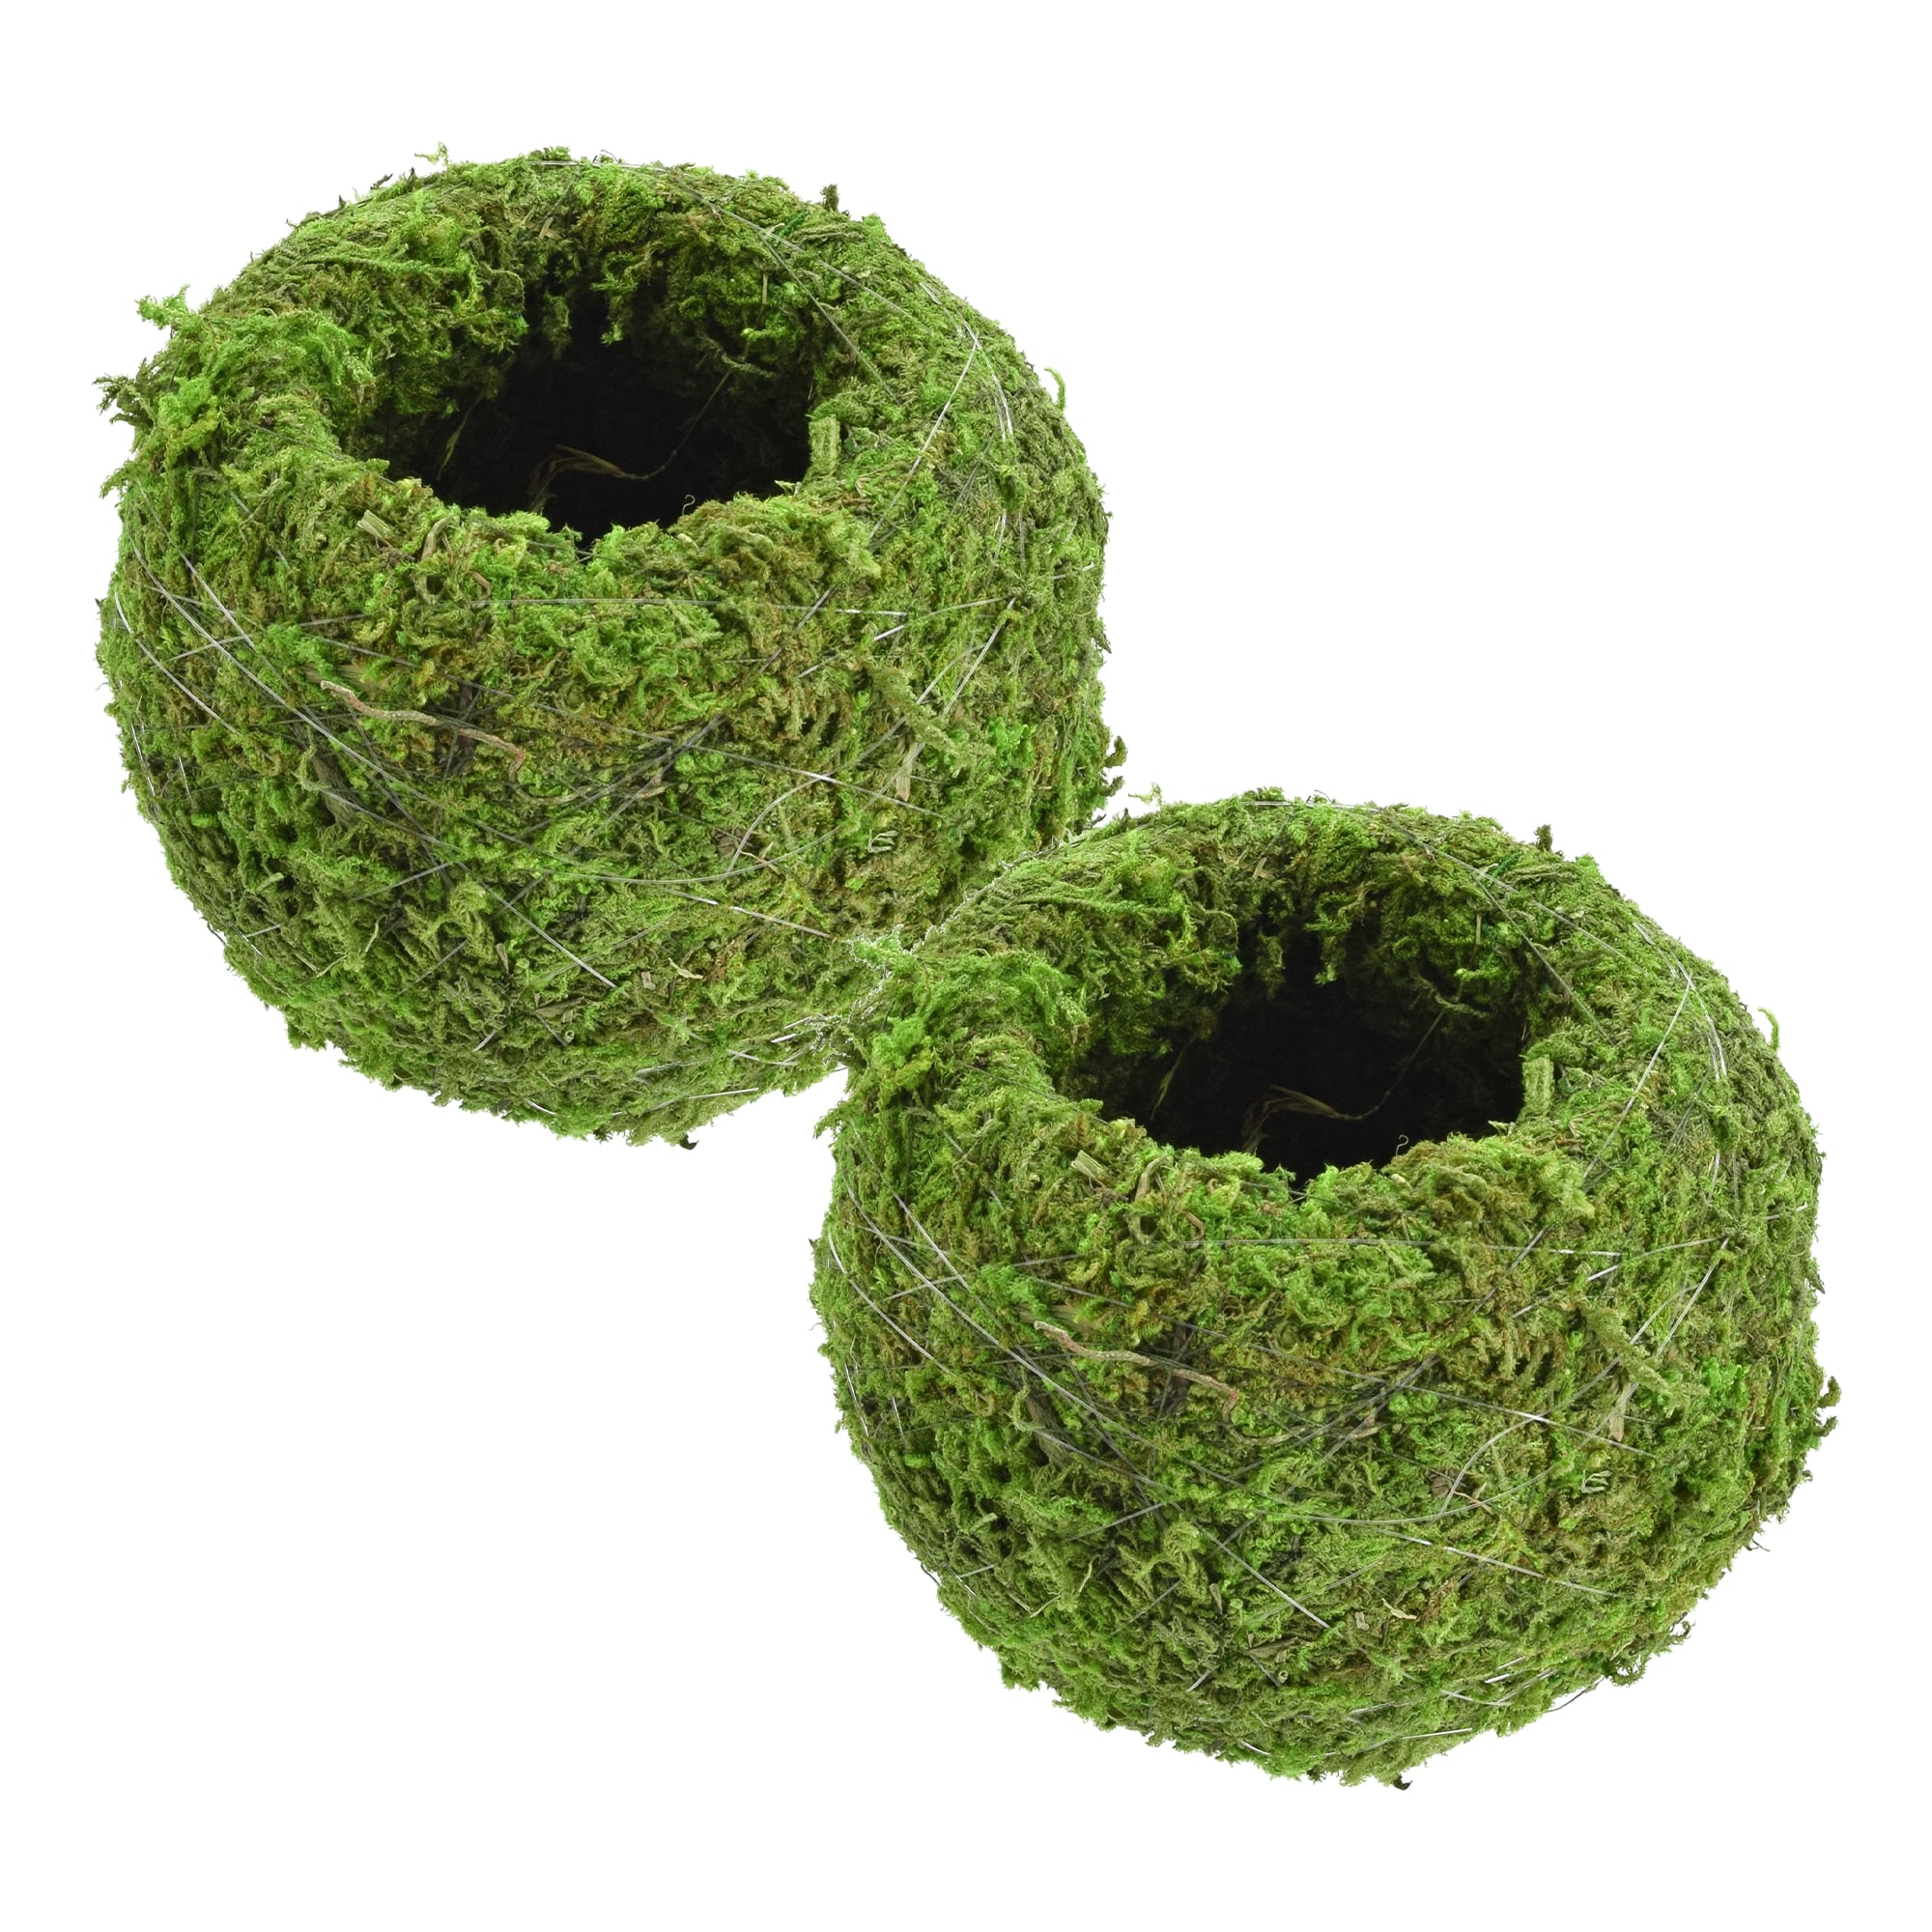 Arcadia Garden Products KO01-2 Kokedama, Japanese Moss Balls-4.0 x 3.5, Set of 2, Green, 4.0 x 3.5